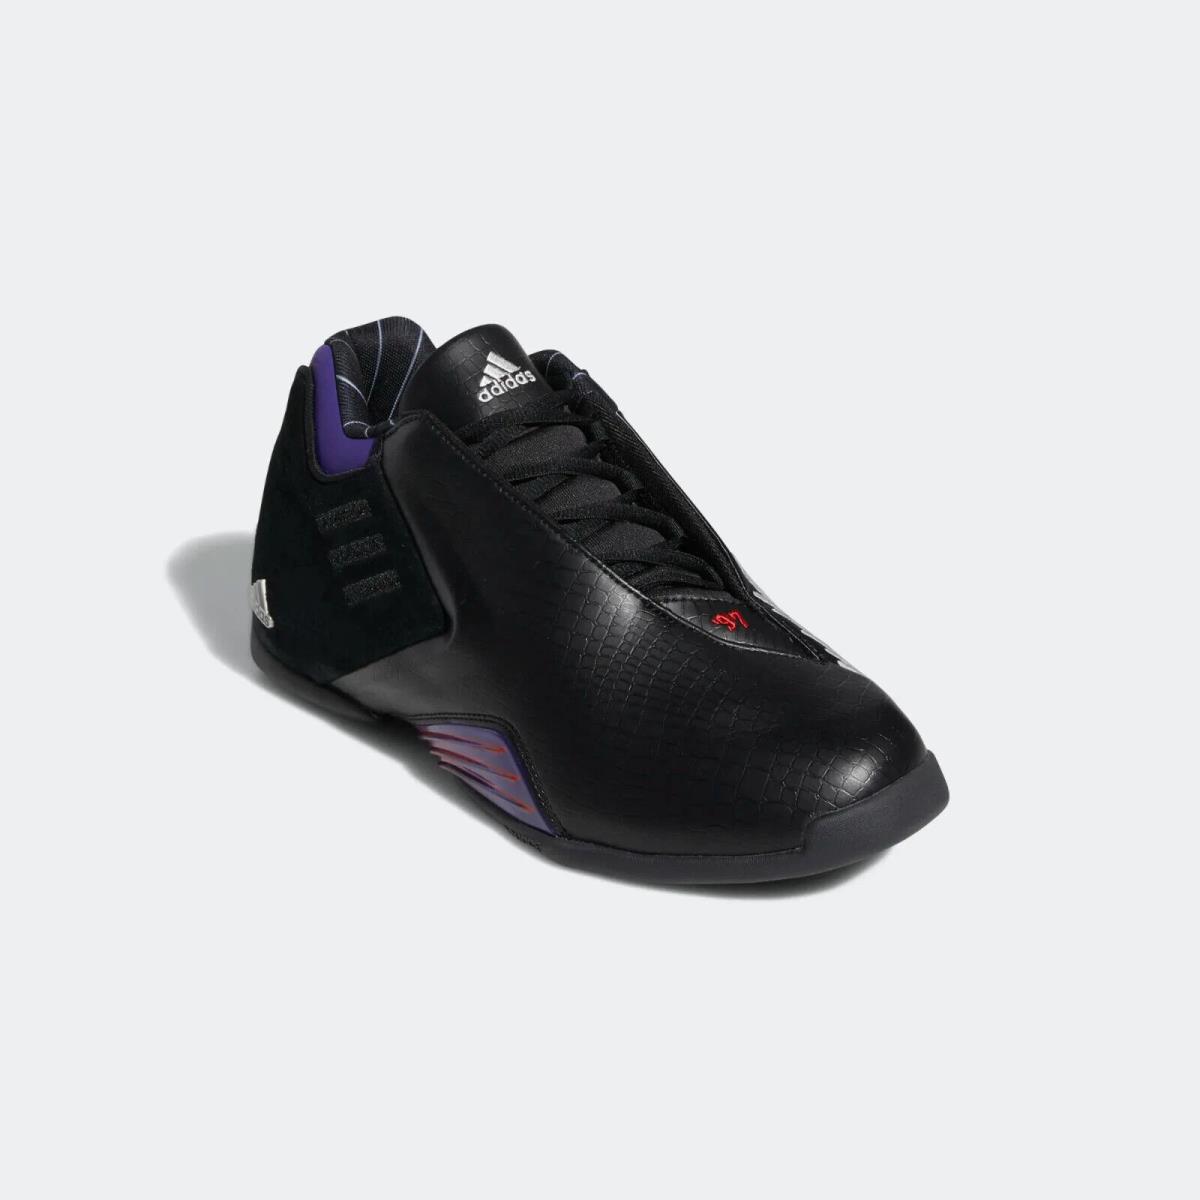 Adidas Tmac 3 Restomod Basketball Shoes Black / Purple Sz 8.5 FX4993